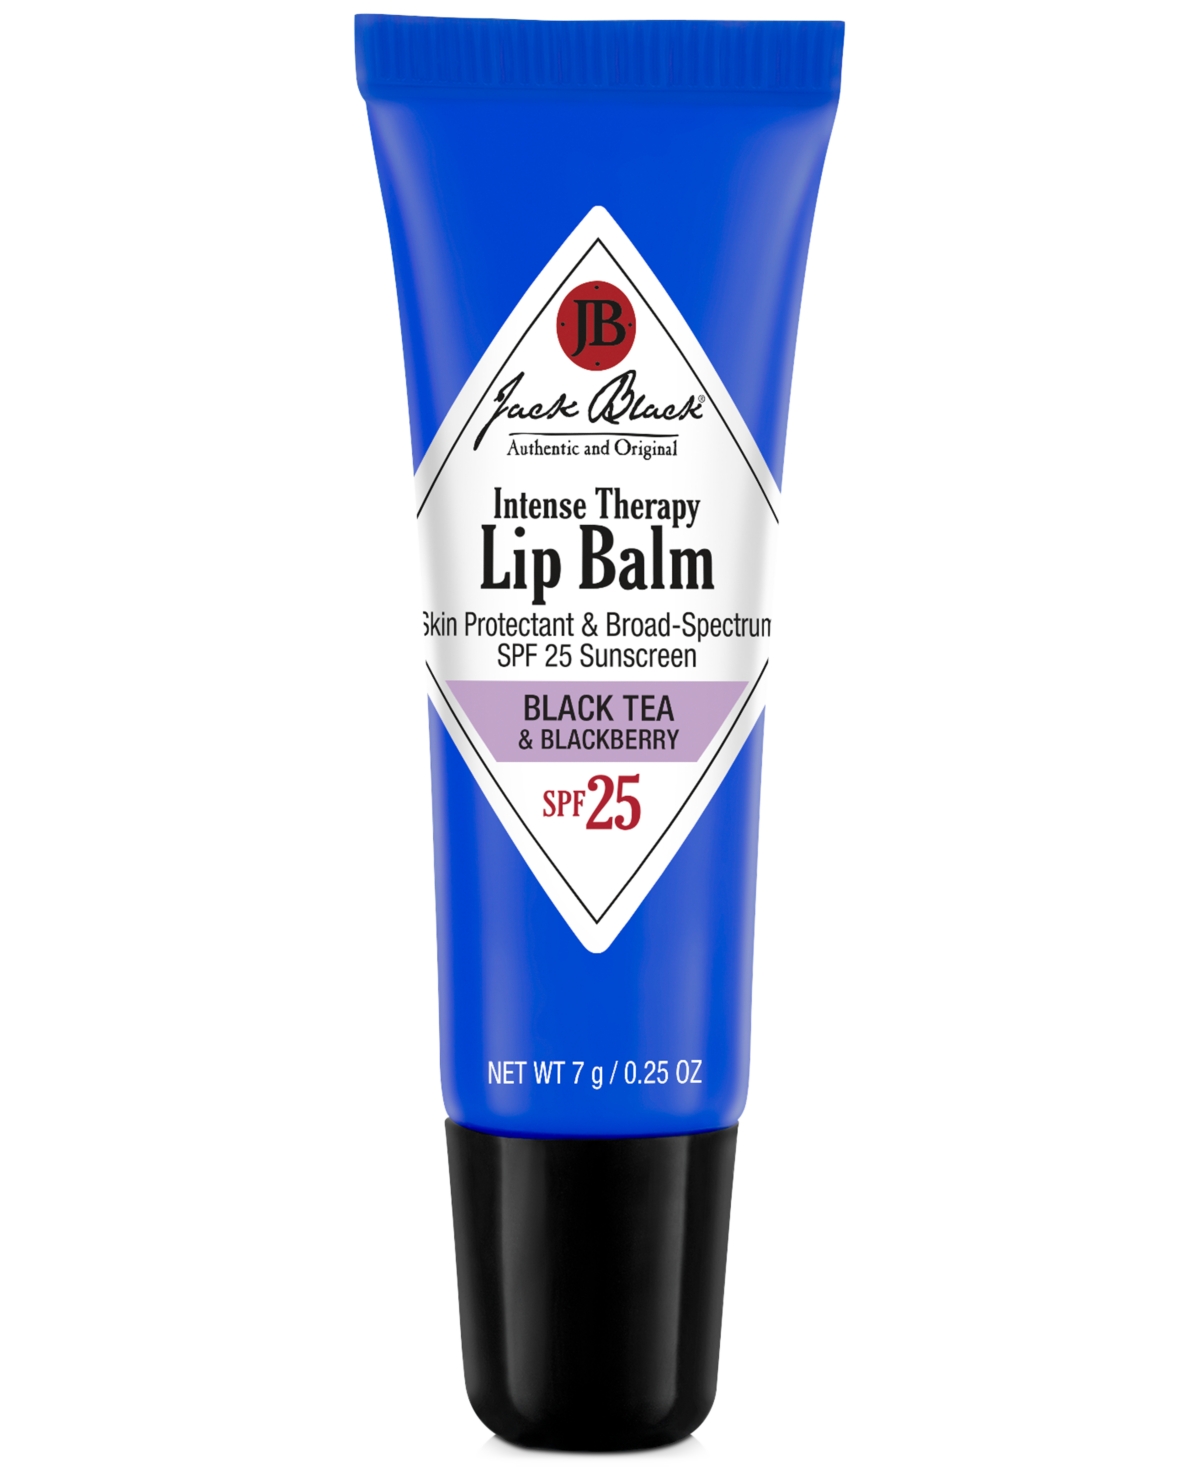 Jack Black Intense Therapy Lip Balm Spf 25 with Black Tea & Blackberry, 0.25 oz